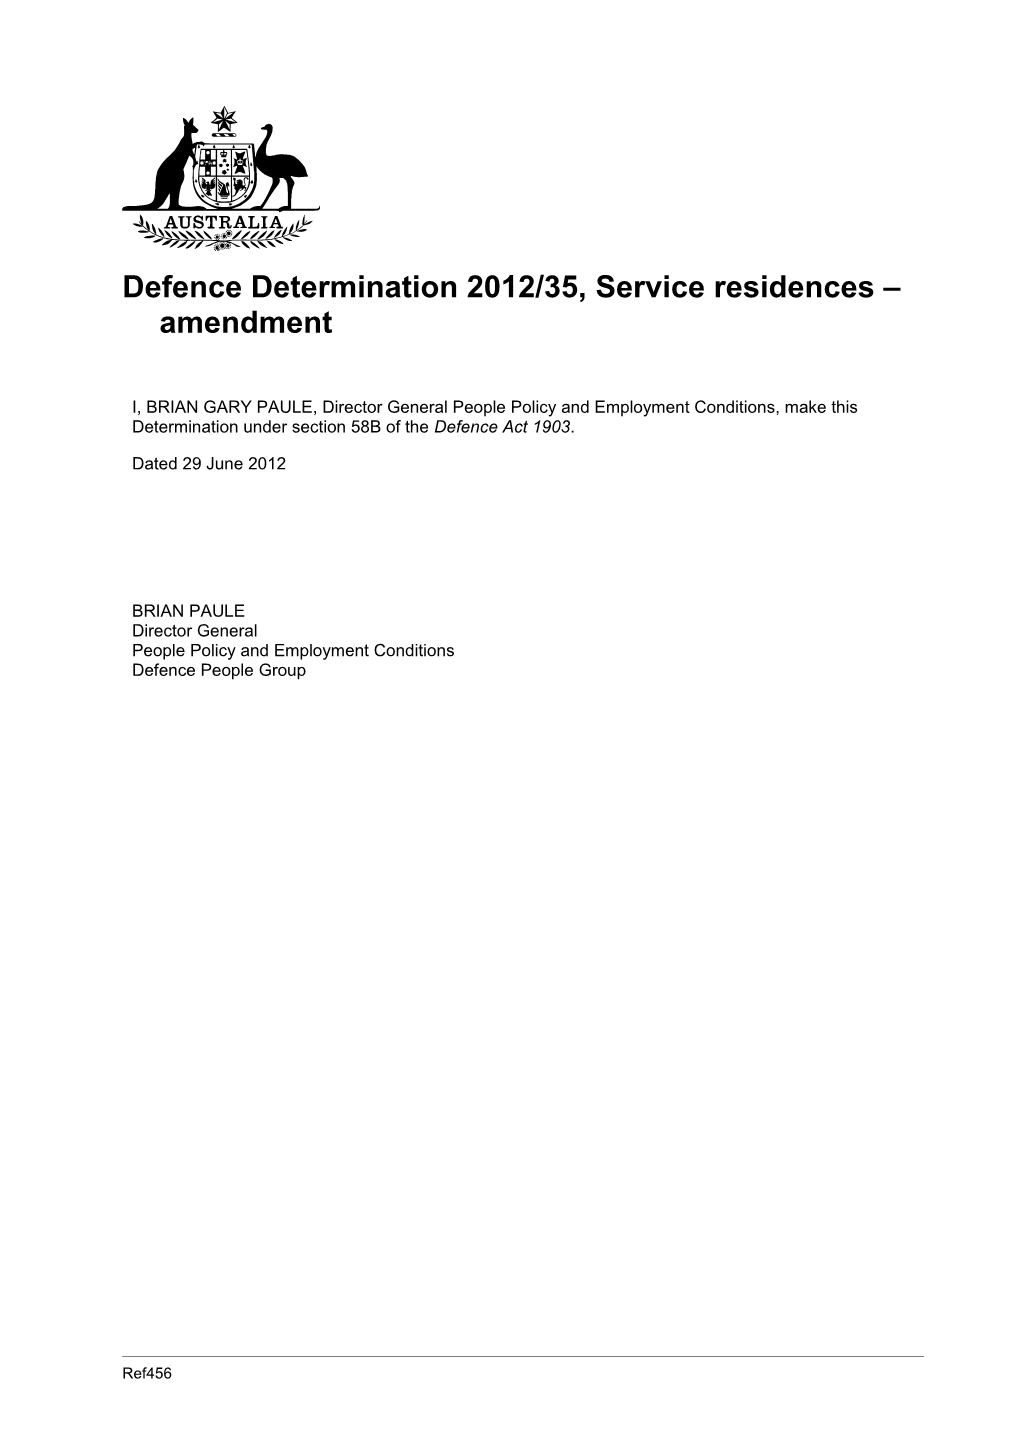 Defence Determination 2012/35, Service Residences Amendment